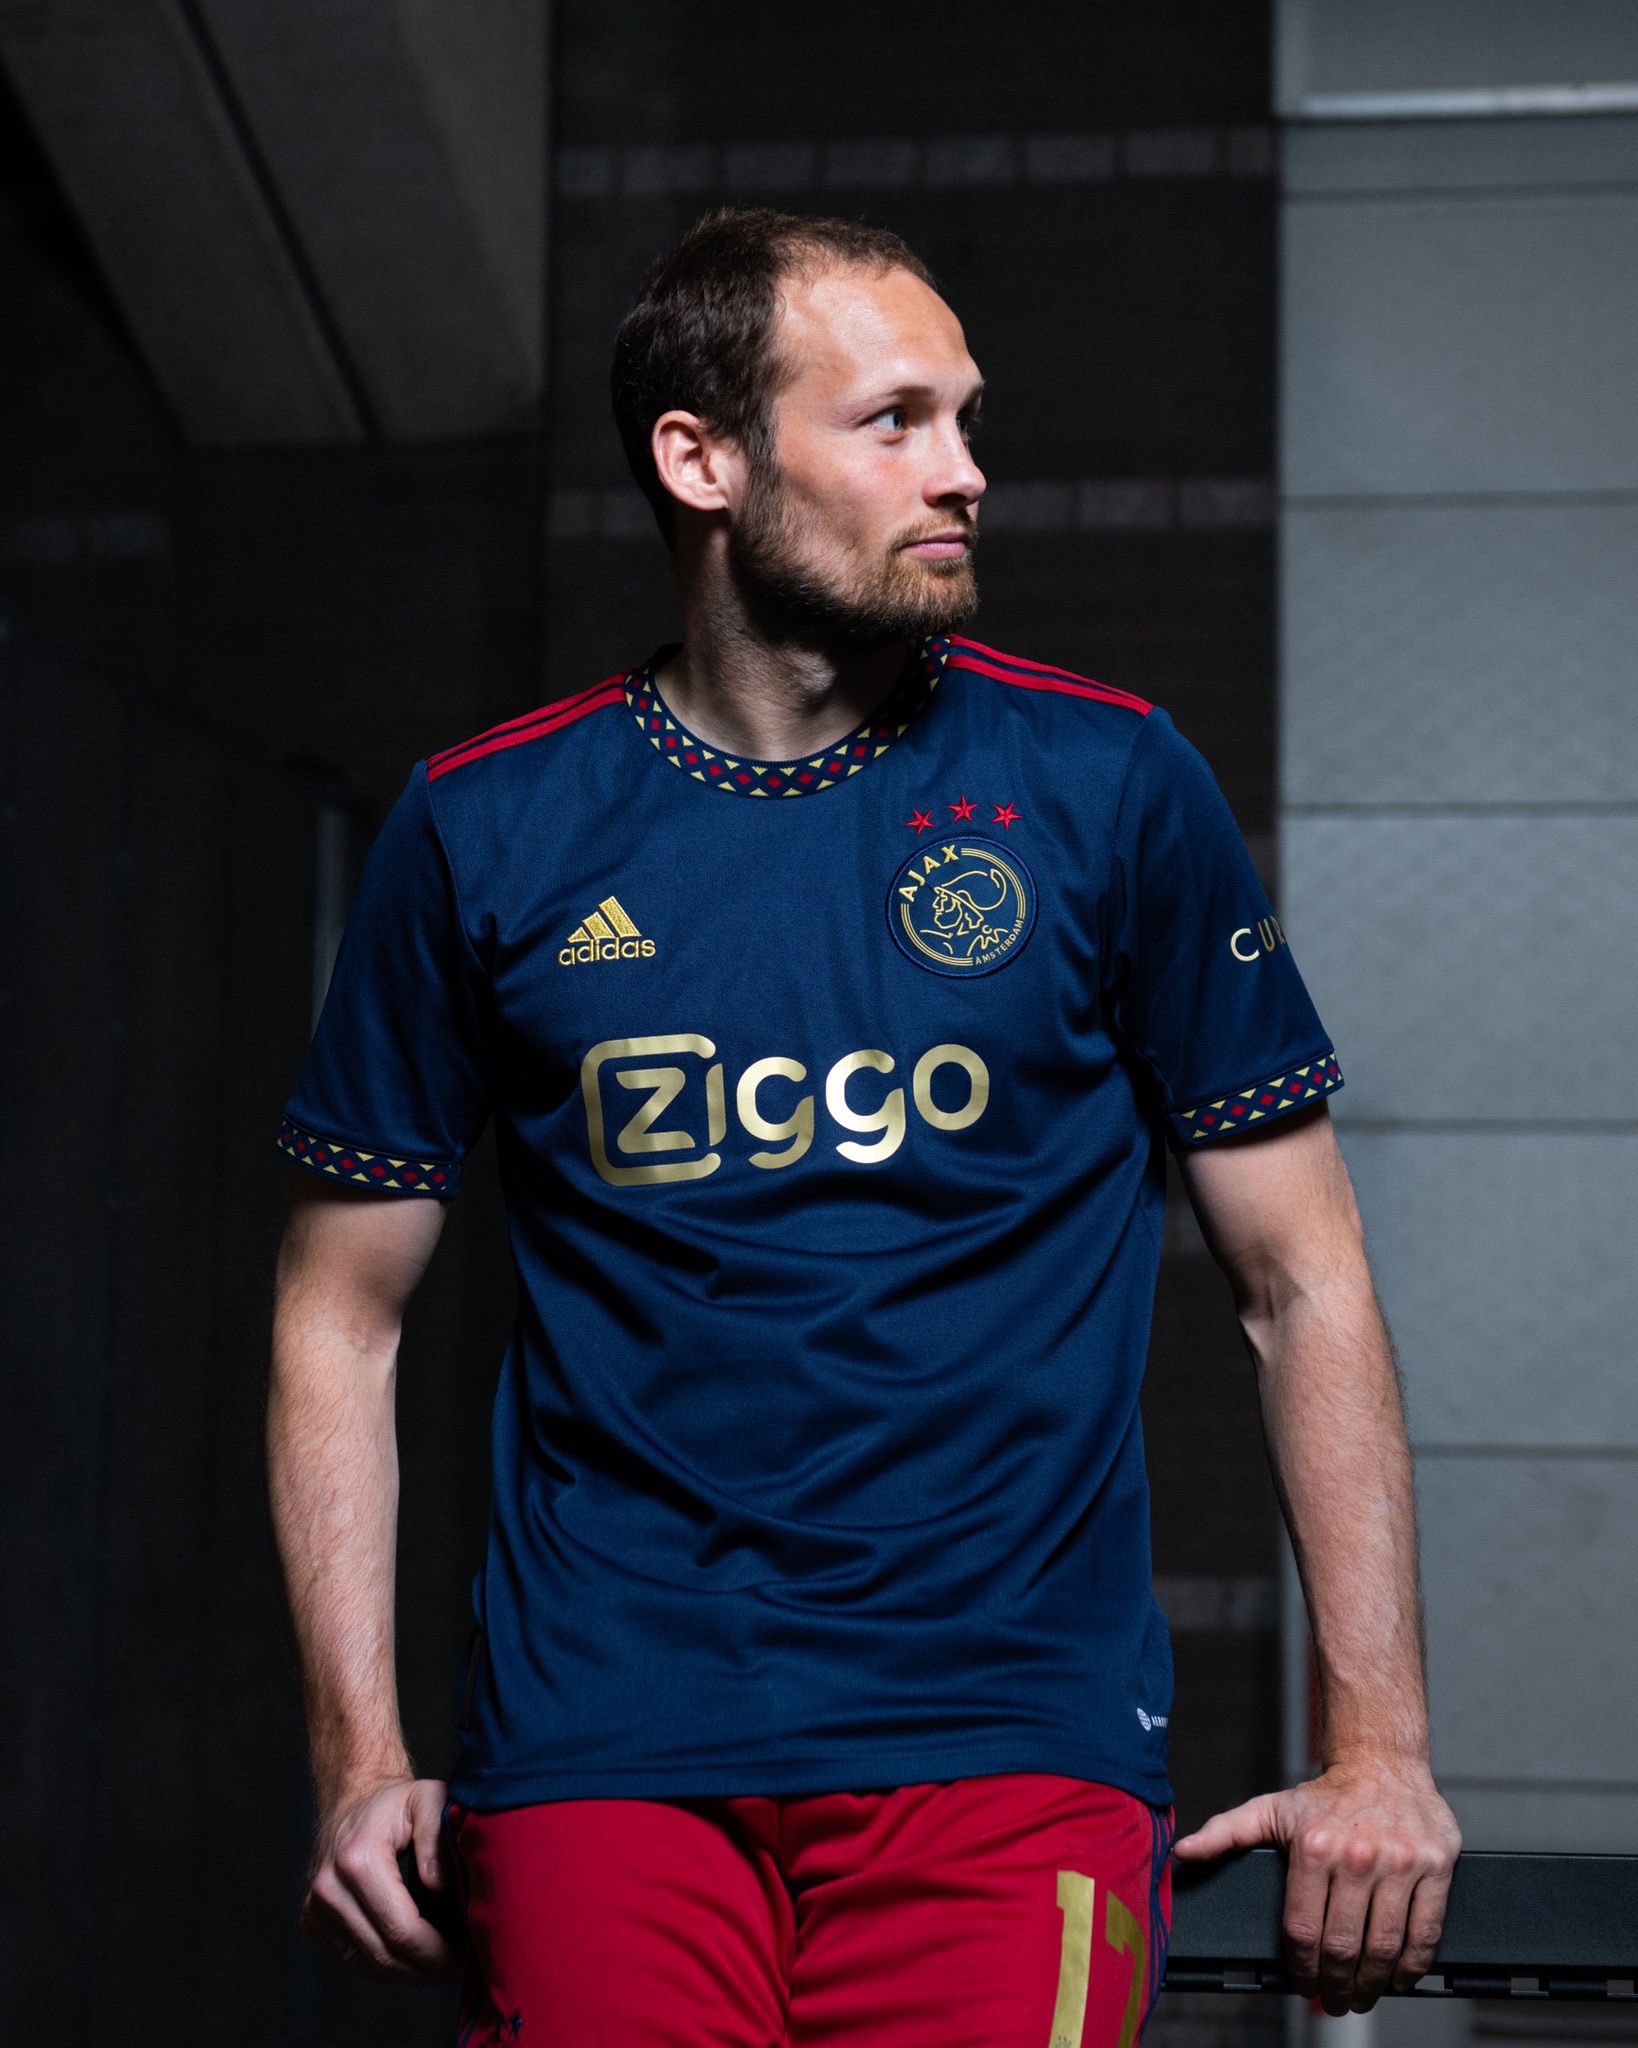 Andre on Twitter: "¿Qué les parece el uniforme del Ajax? https://t.co/RDtNtDbwz4" / Twitter